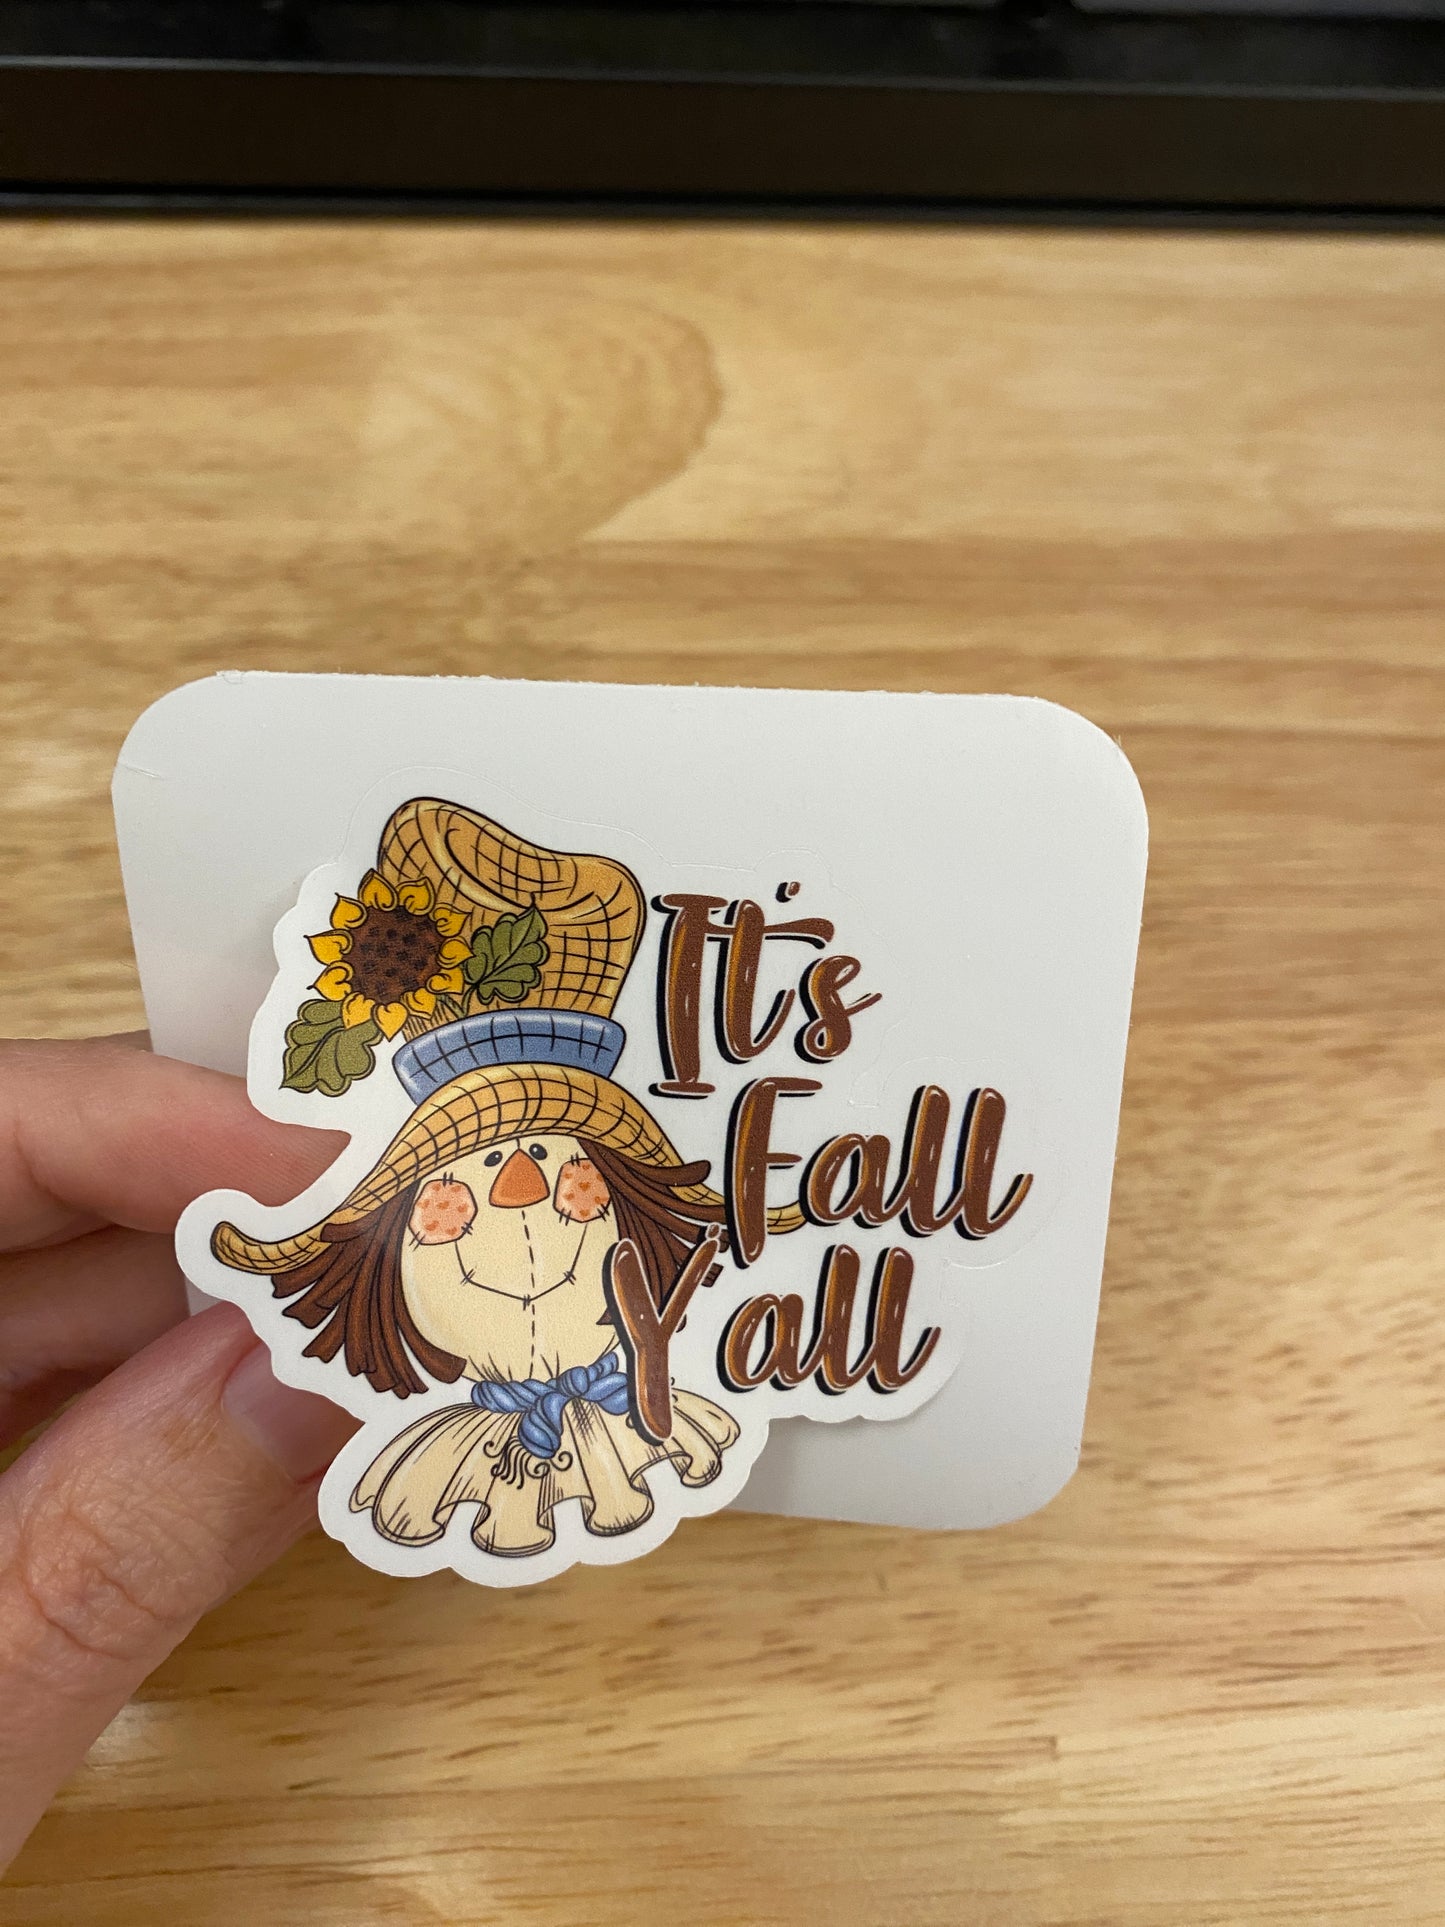 Its Fall yall STICKER, Autumn Sticker, Holographic option, Cute Fall Gnome Design Sticker, Gnomie Love Fall design